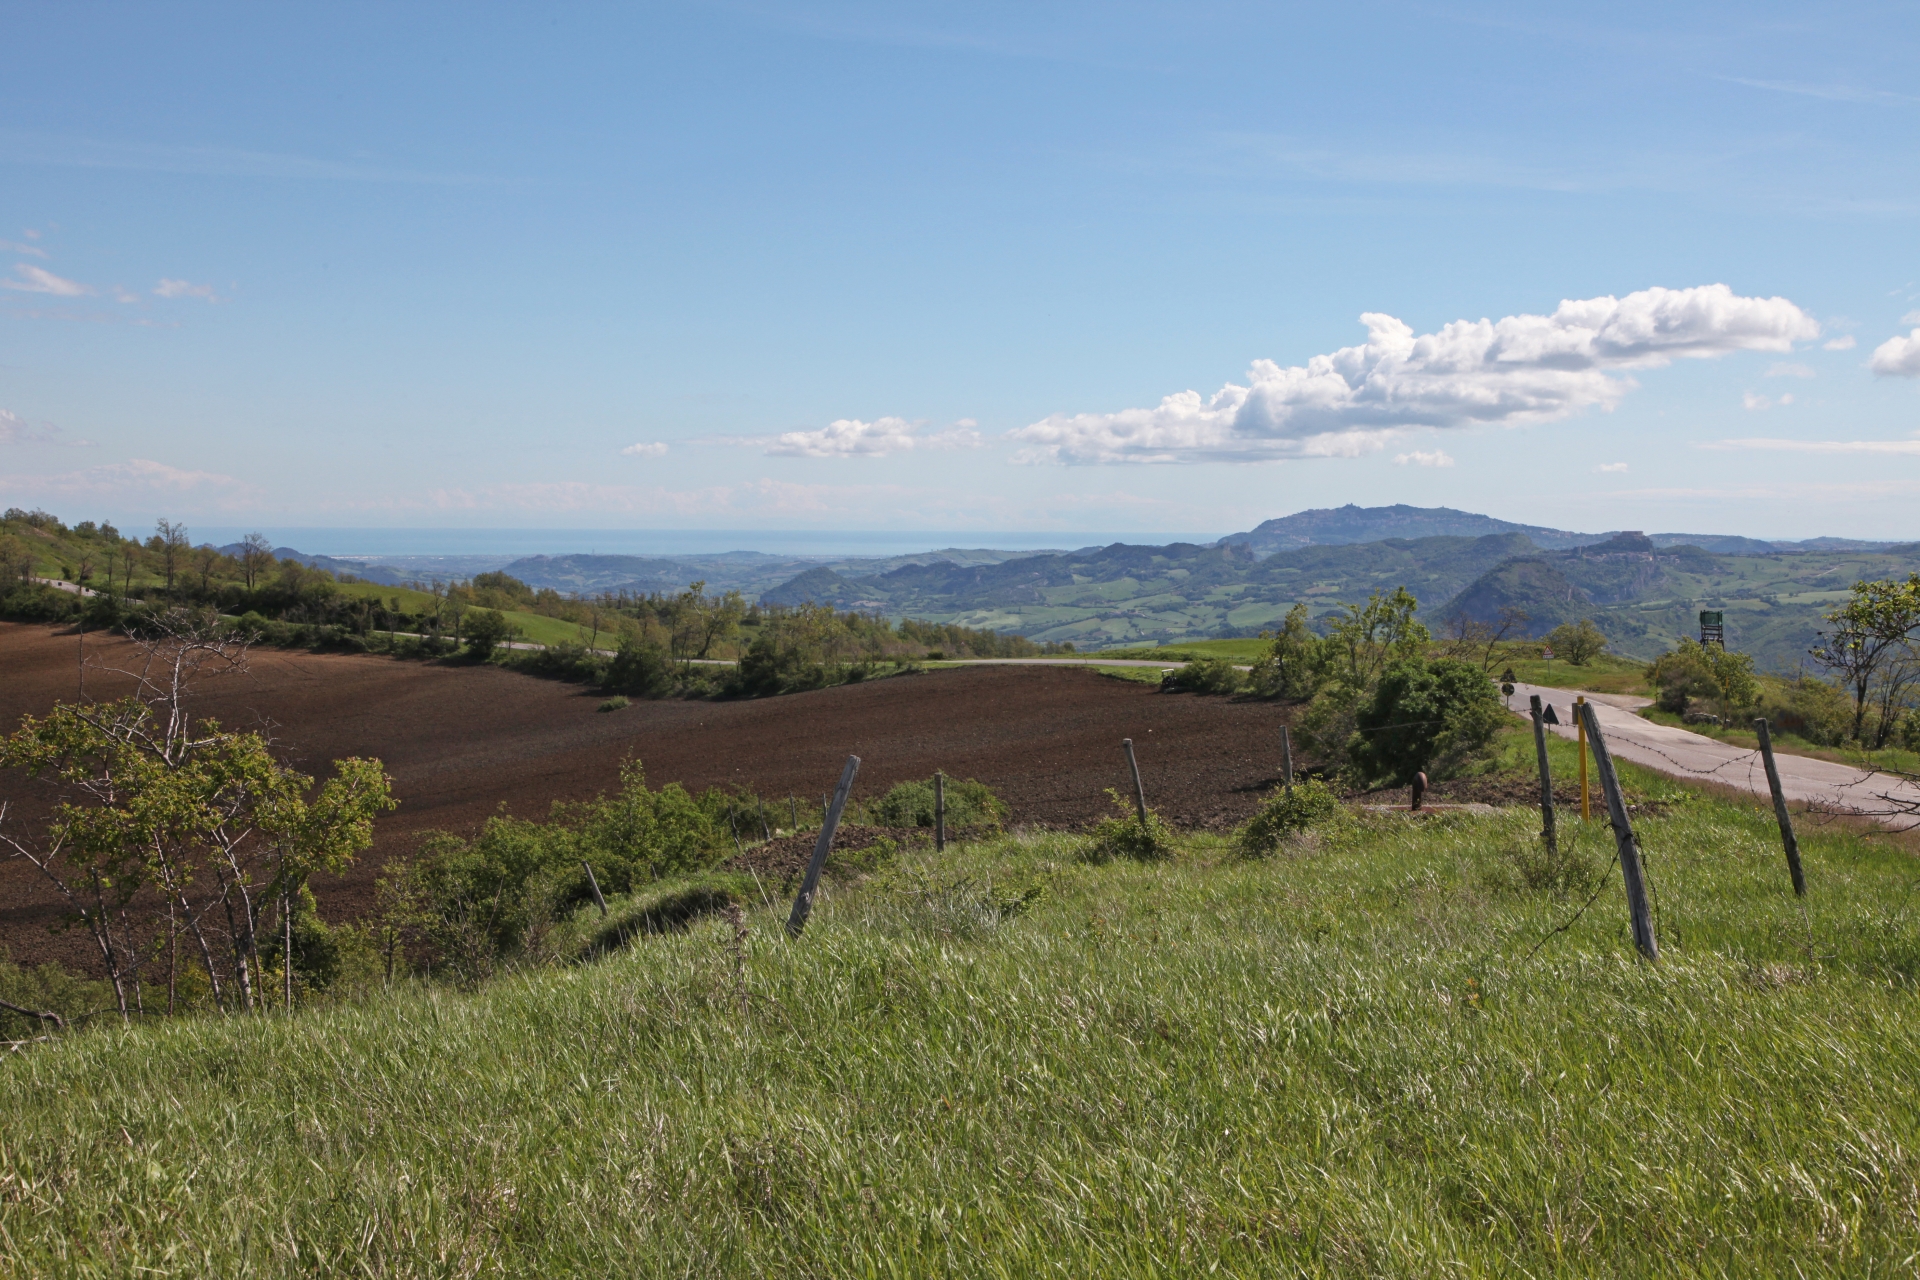 Novafeltria, countryside photo by pa